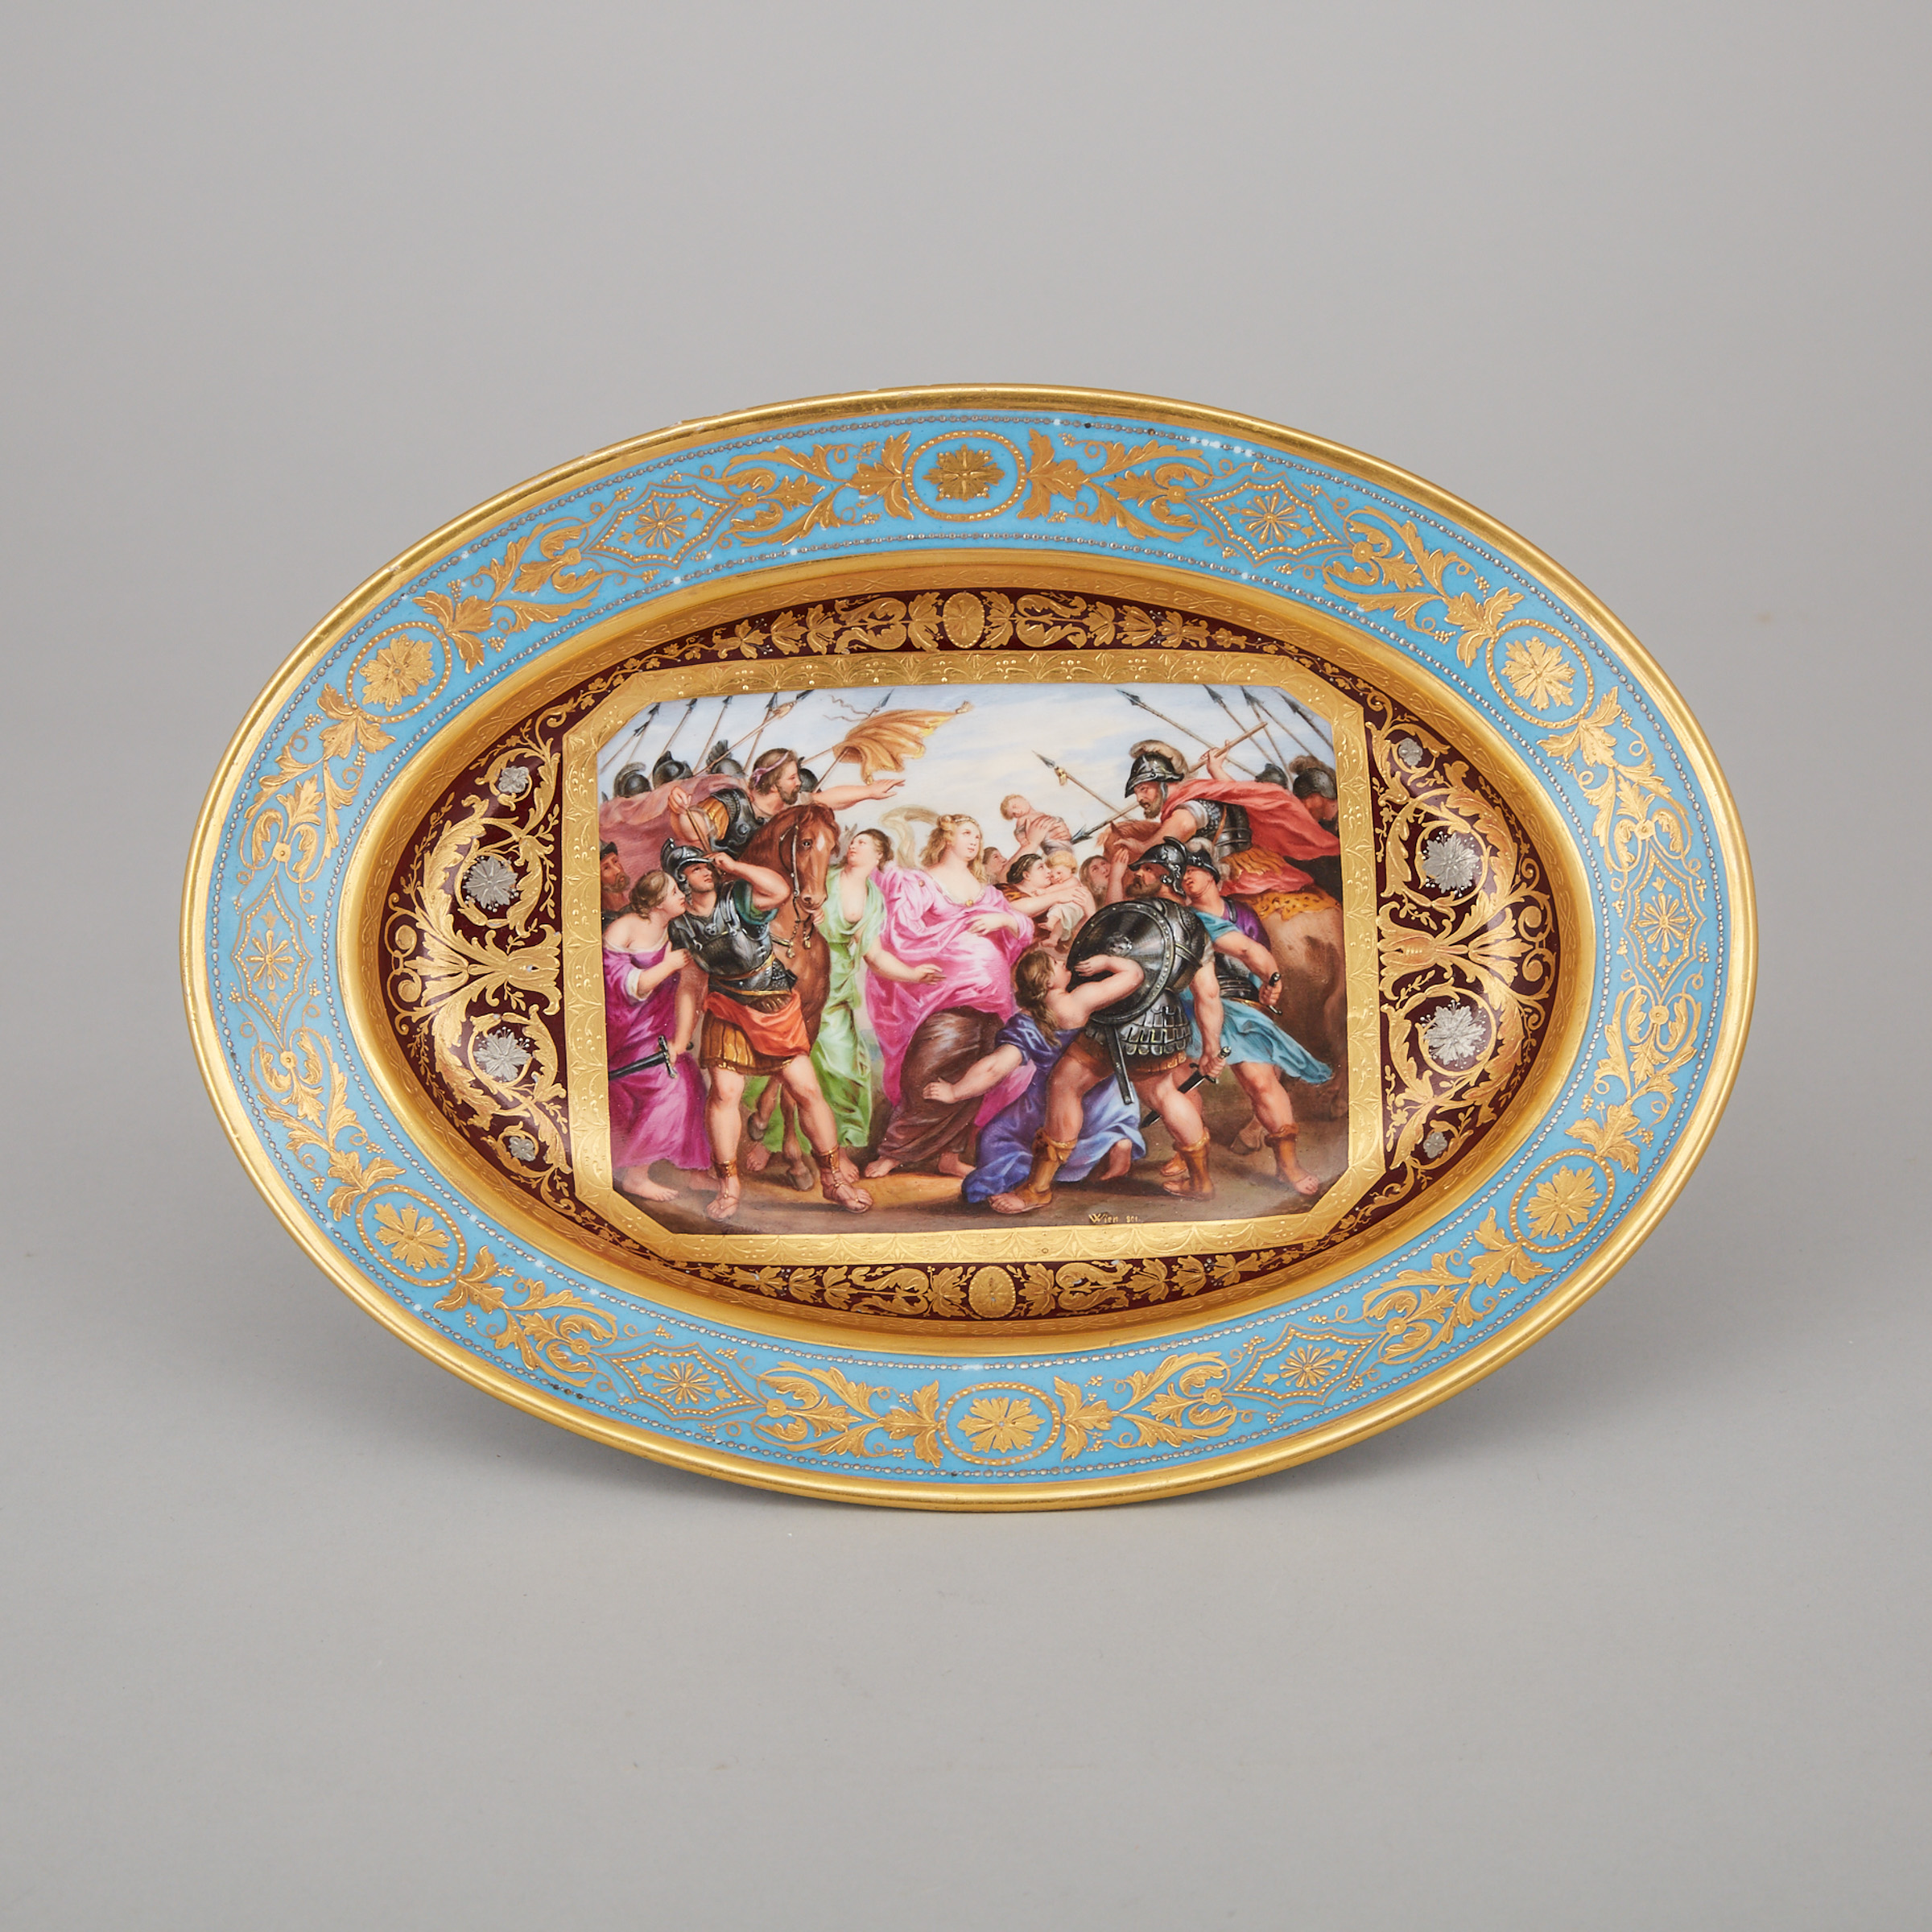 'Vienna' Oval Small Platter, late 19th century